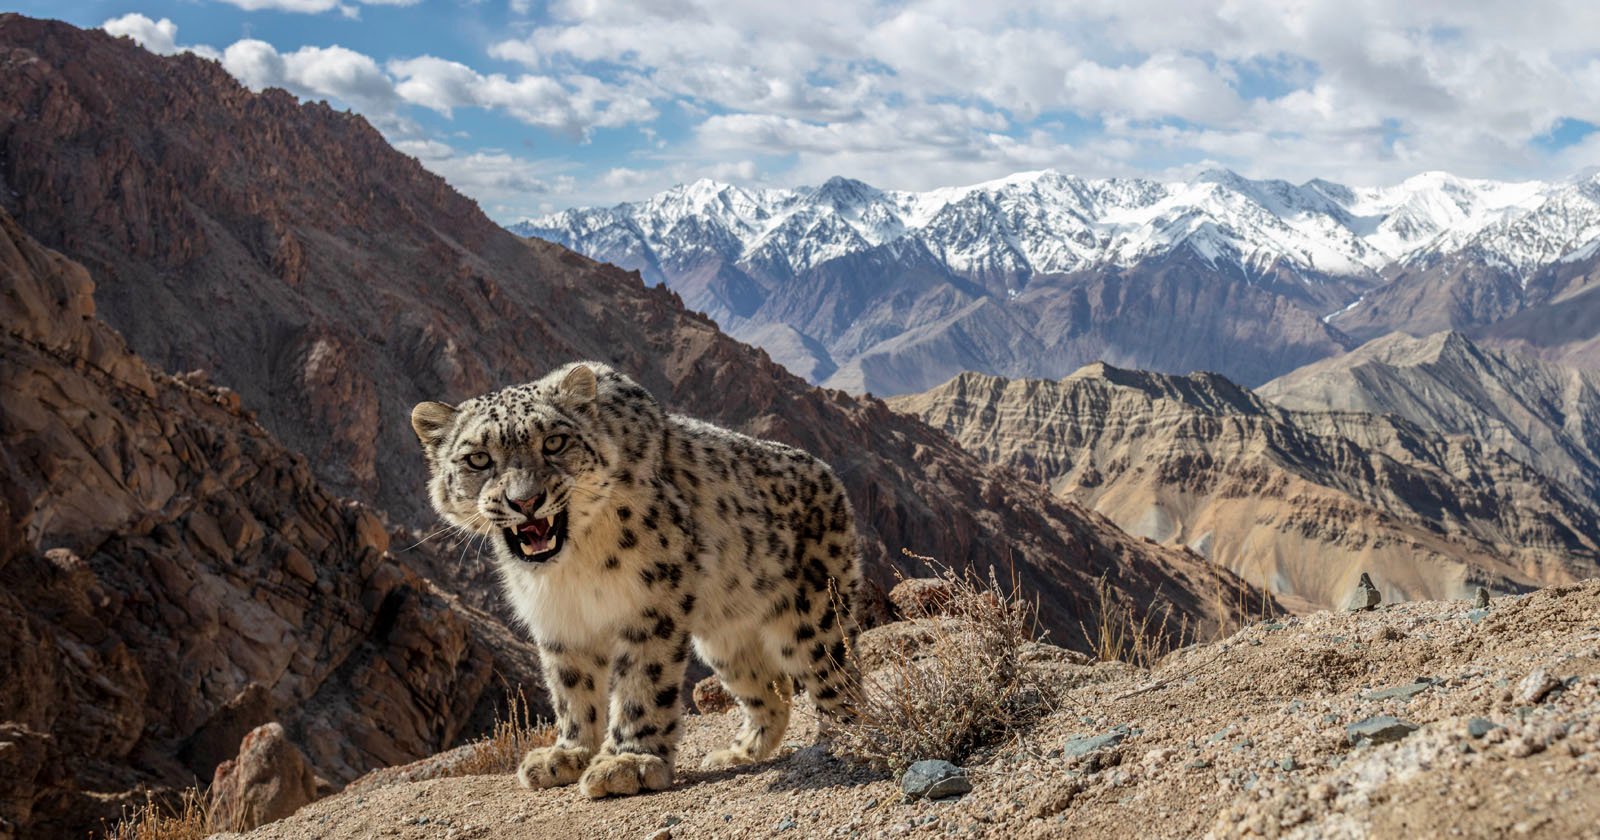 Snow Leopard - The Elusive Big Cat